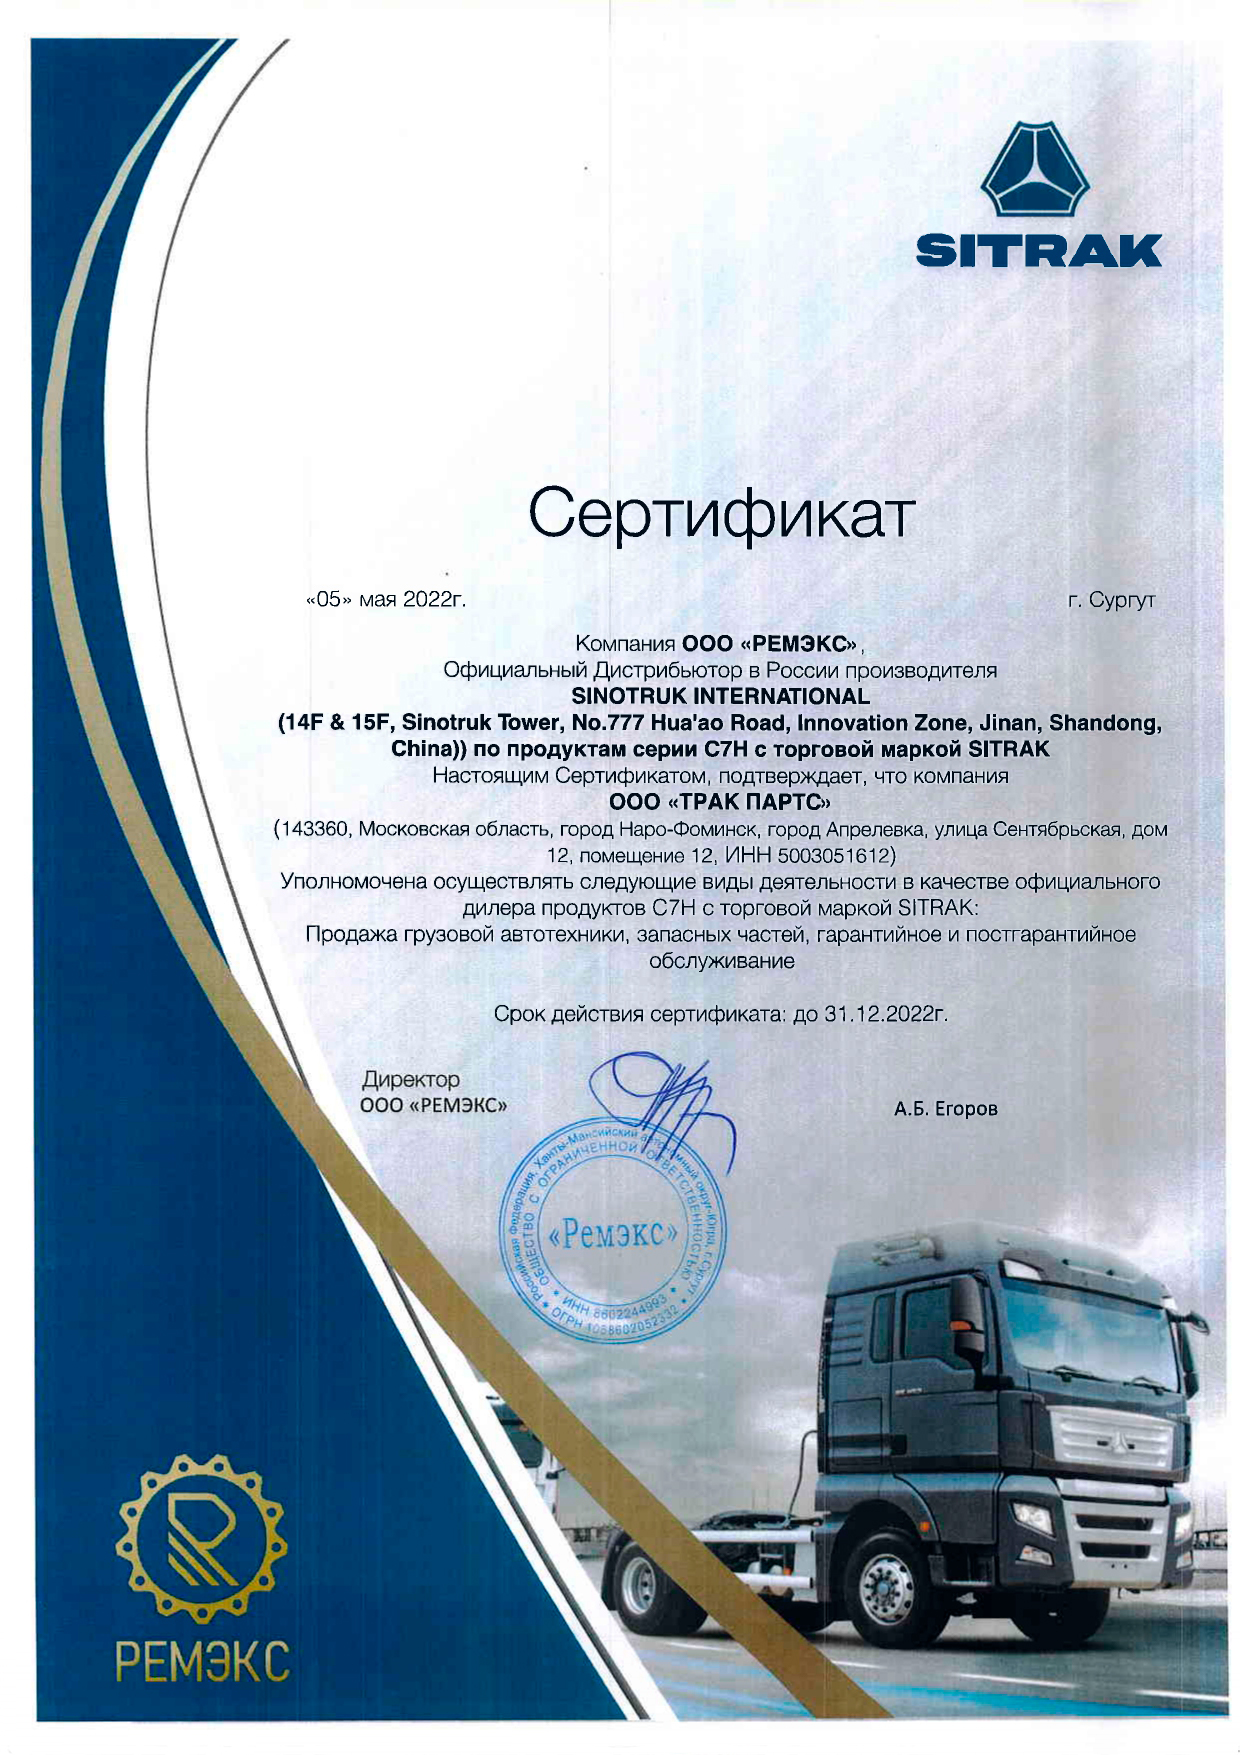 Сертификат дилера Трак Партс Sitrak